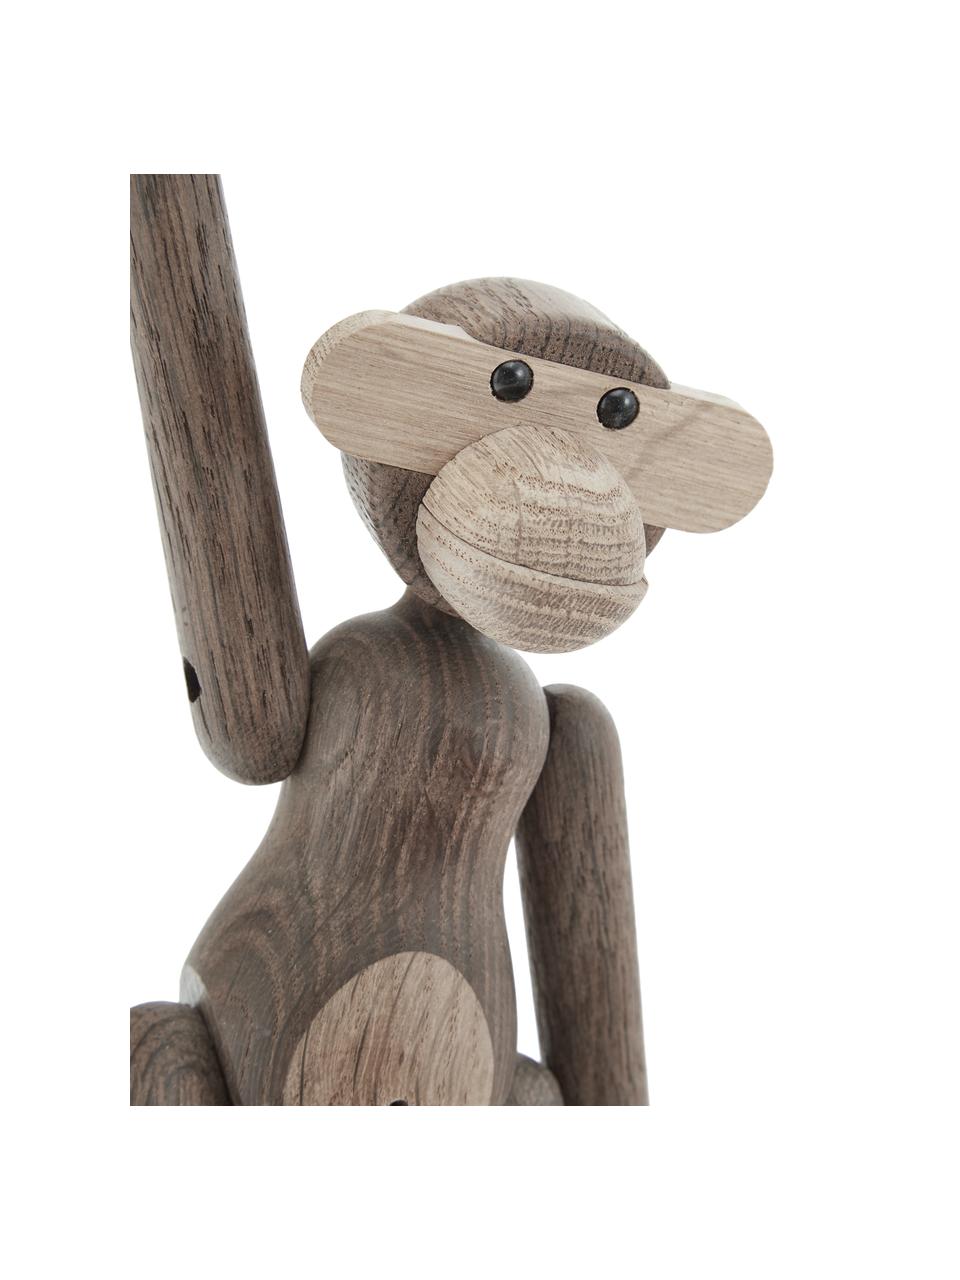 Designer-Deko-Objekt Monkey aus Eichenholz, Eichenholz, lackiert, FSC-zertifiziert, Eichenholz, B 20 x H 19 cm